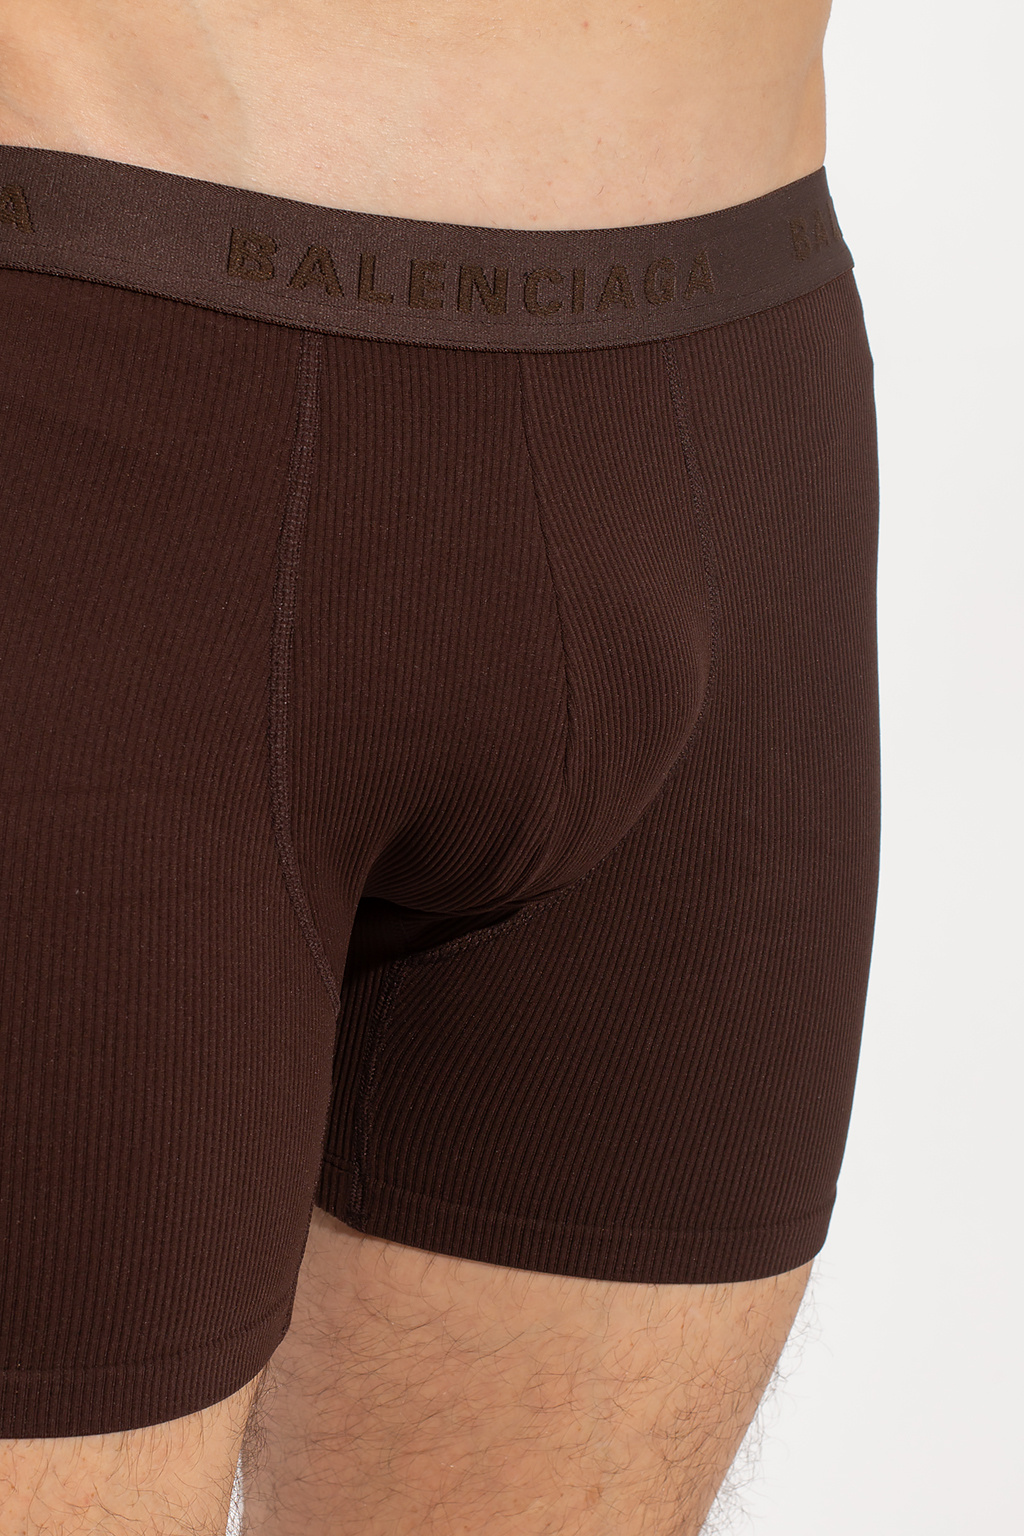 Brown Boxers with logo Balenciaga - Vitkac Germany